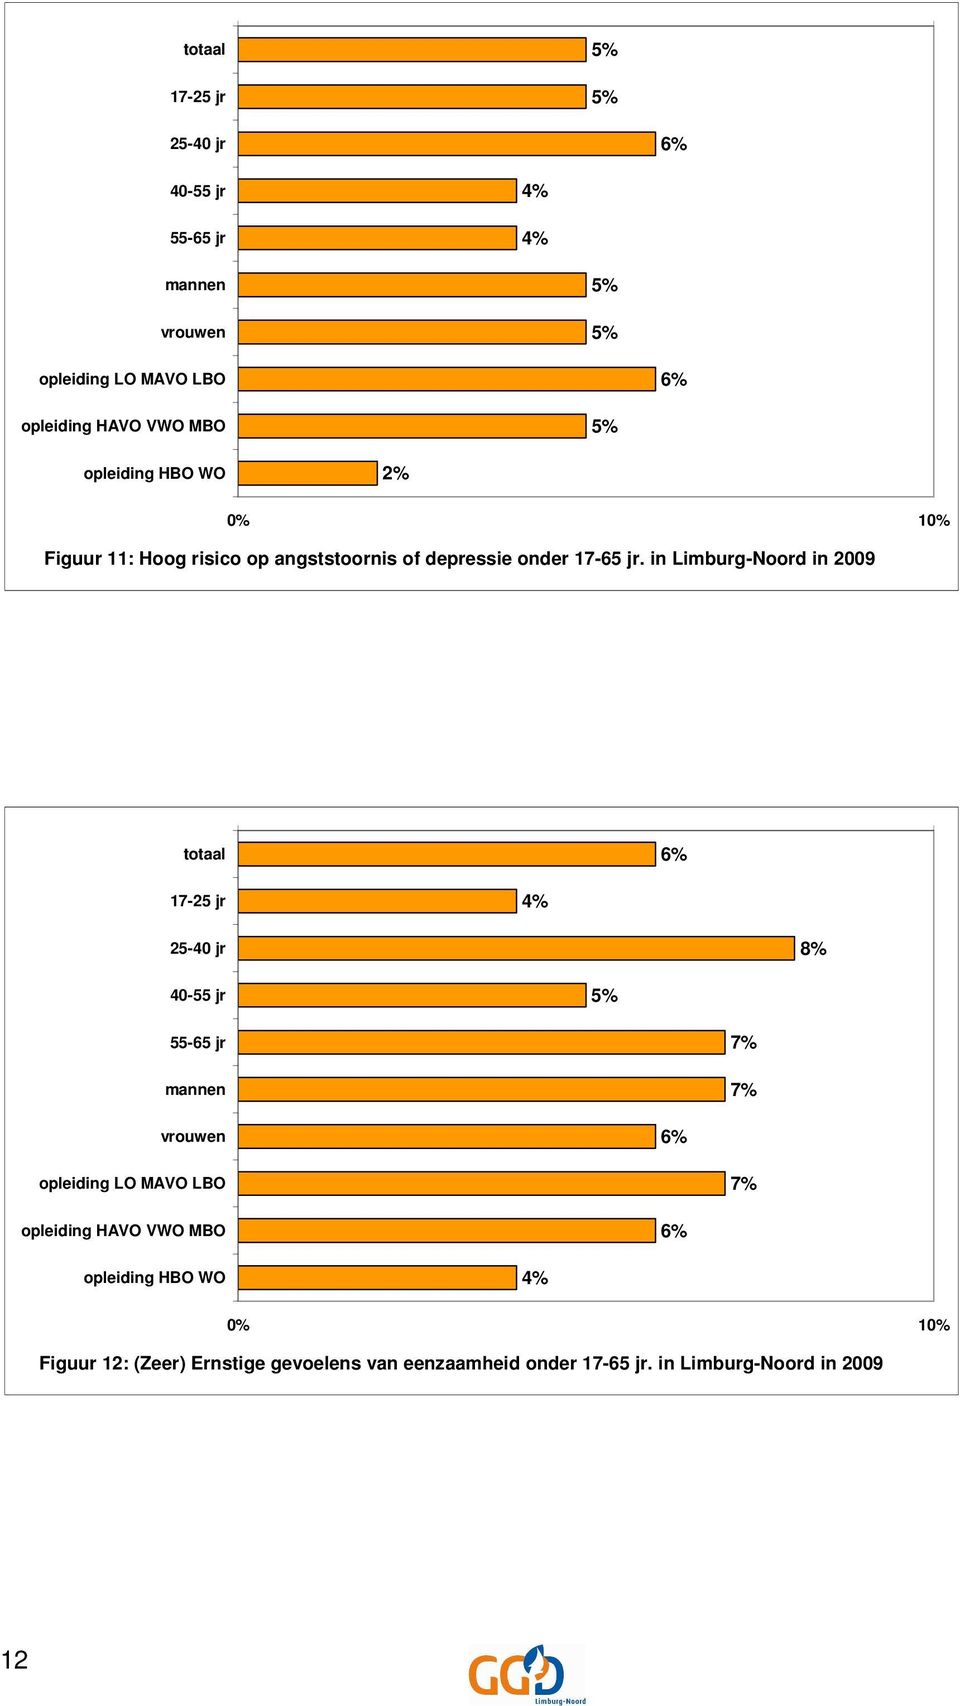 in Limburg-Noord in 2009 totaal 6% 17-25 jr 4% 25-40 jr 8% 40-55 jr 5% 55-65 jr mannen 7% 7% vrouwen 6% opleiding LO MAVO LBO